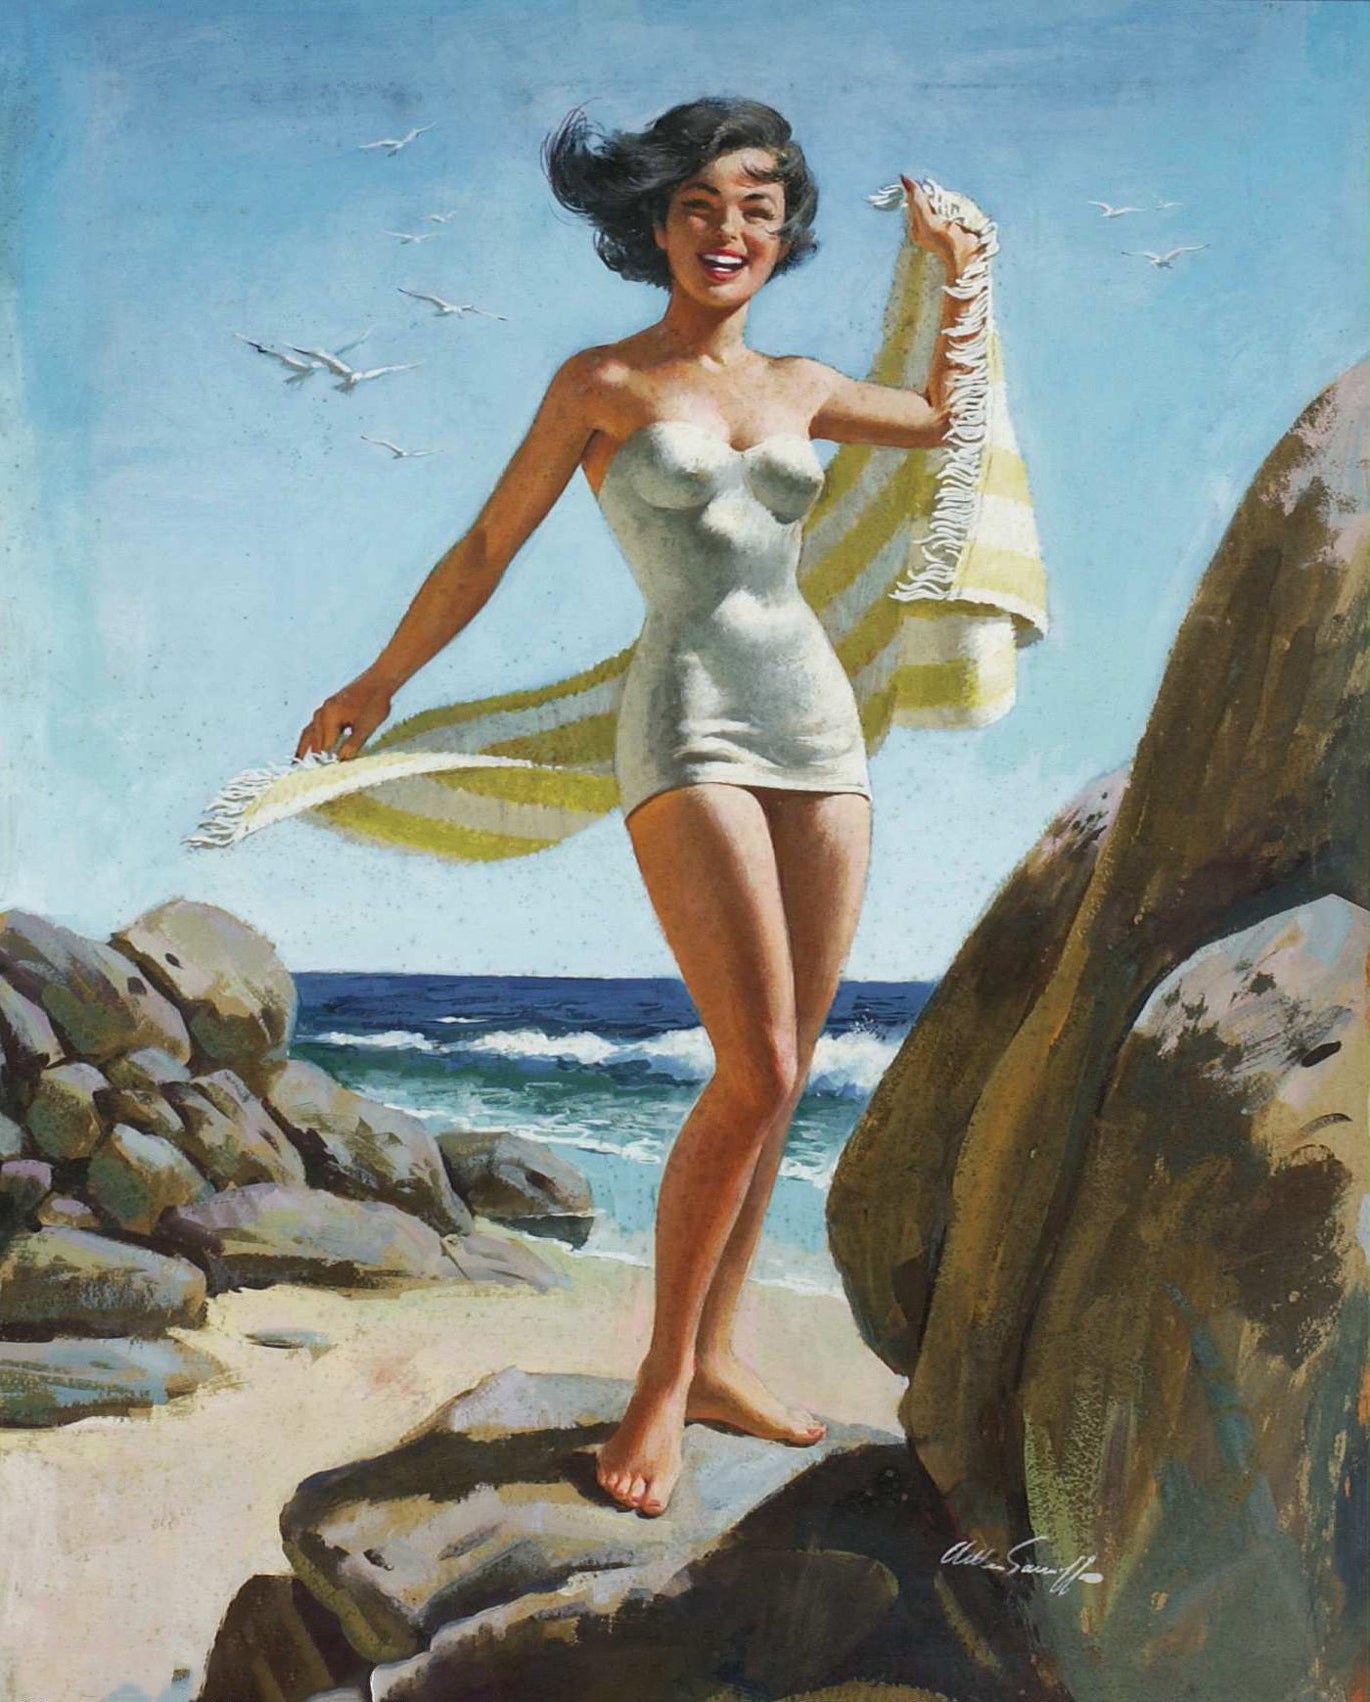 Arthur Sarnoff - Pin-Up Girl in Swimsuit at Beach 1960s - 17x22 Fine Art  Print